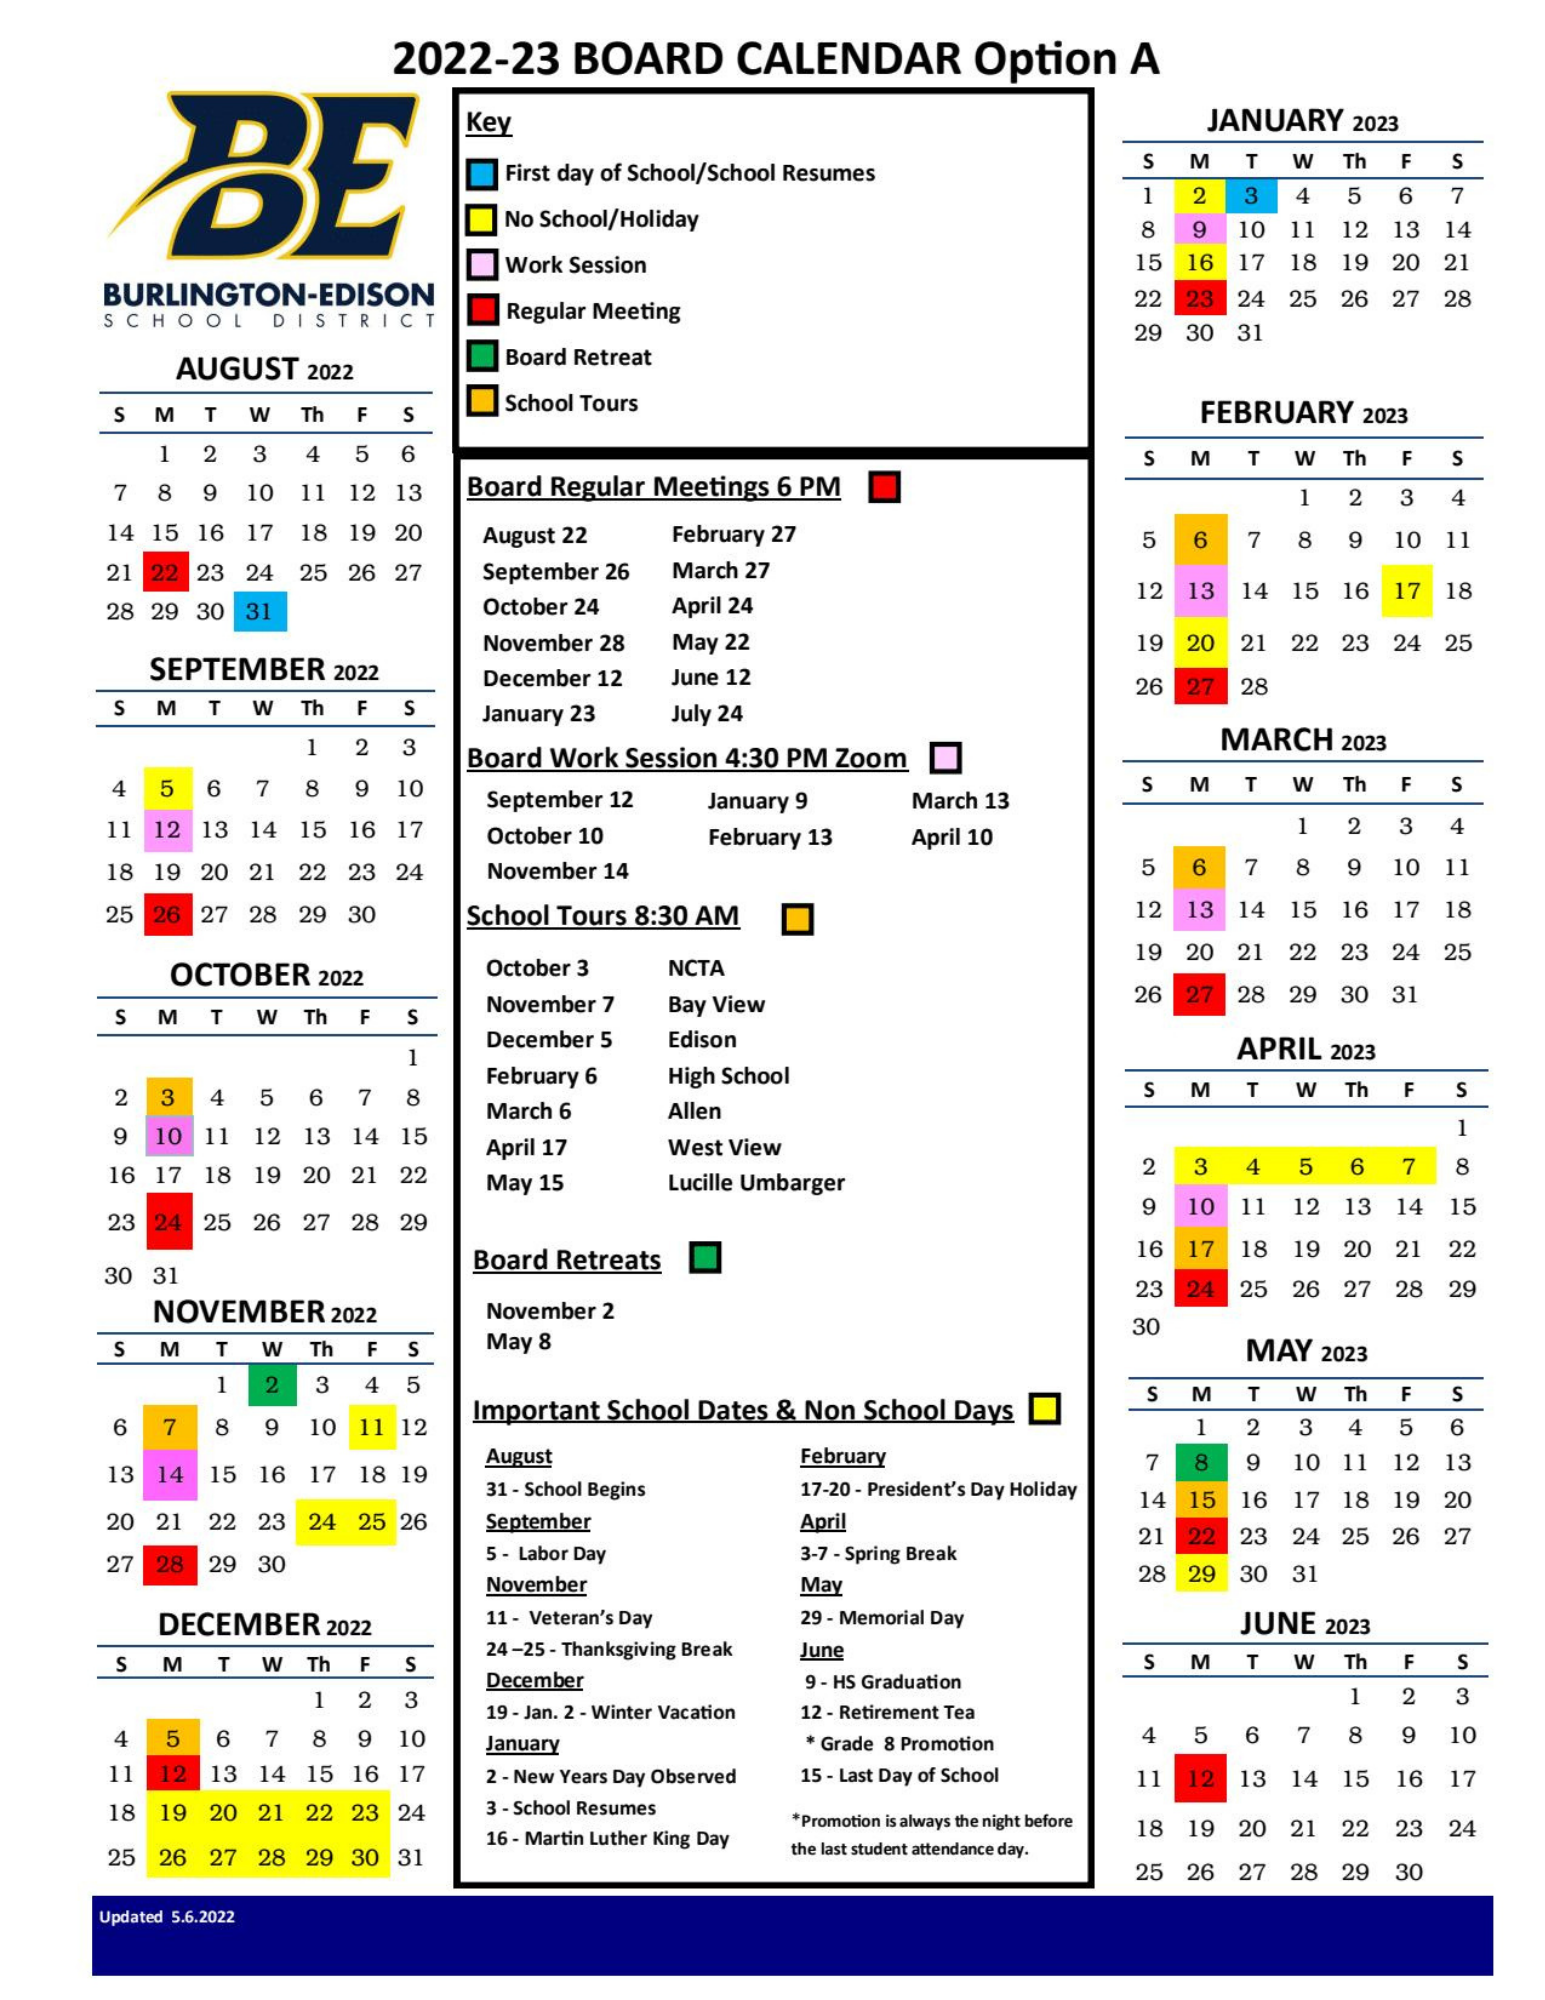 board-calendar-burlington-edison-school-district